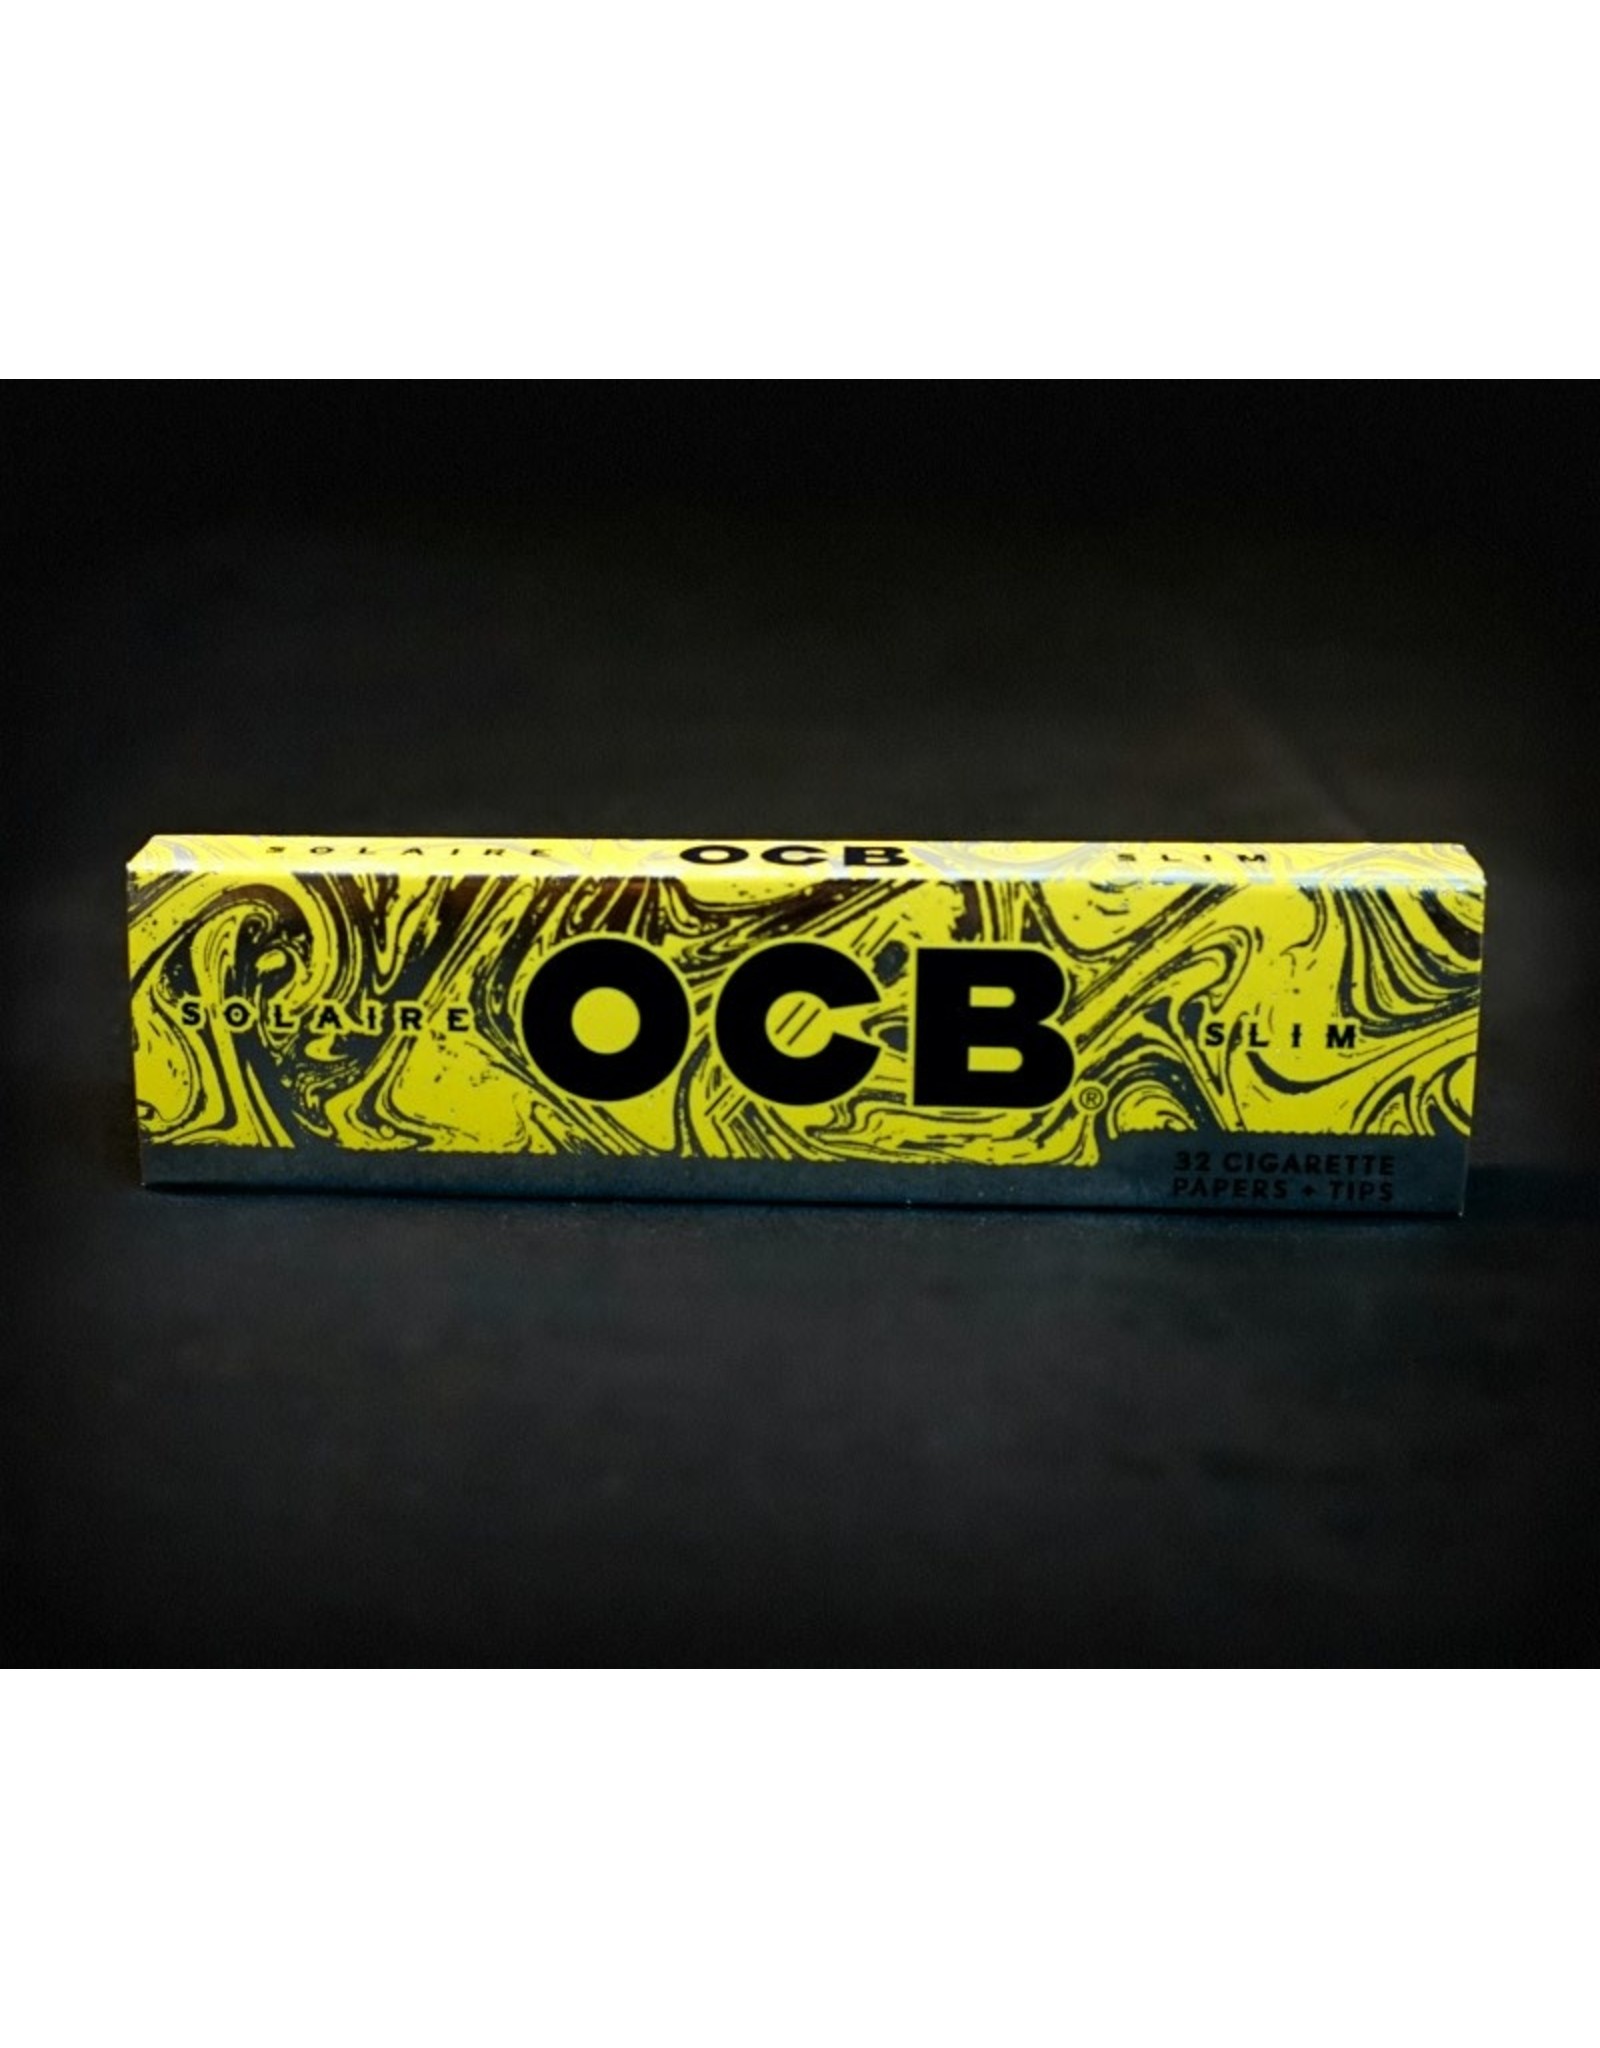 OCB OCB Solaire KS Slim w/ Tips